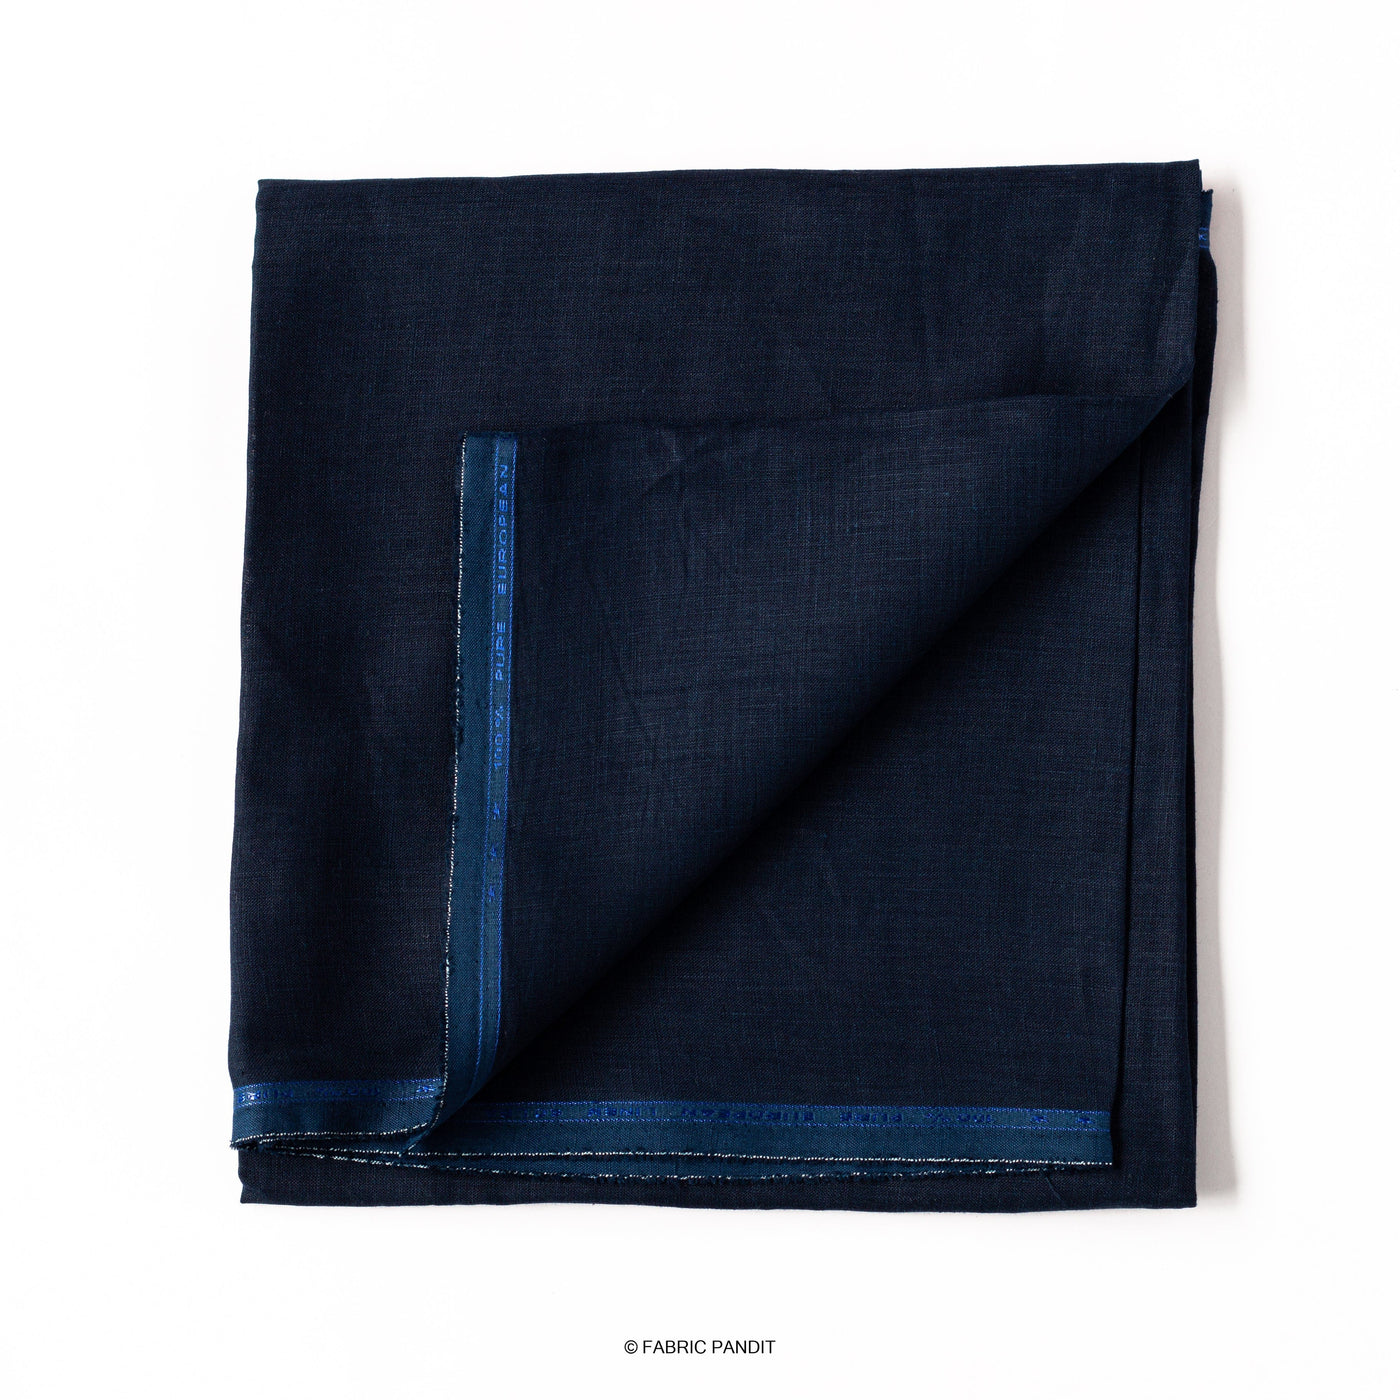 Fabric Pandit Fabric Denim blue Plain Premium 60 Lea Pure Linen Fabric (Width 58 inch)